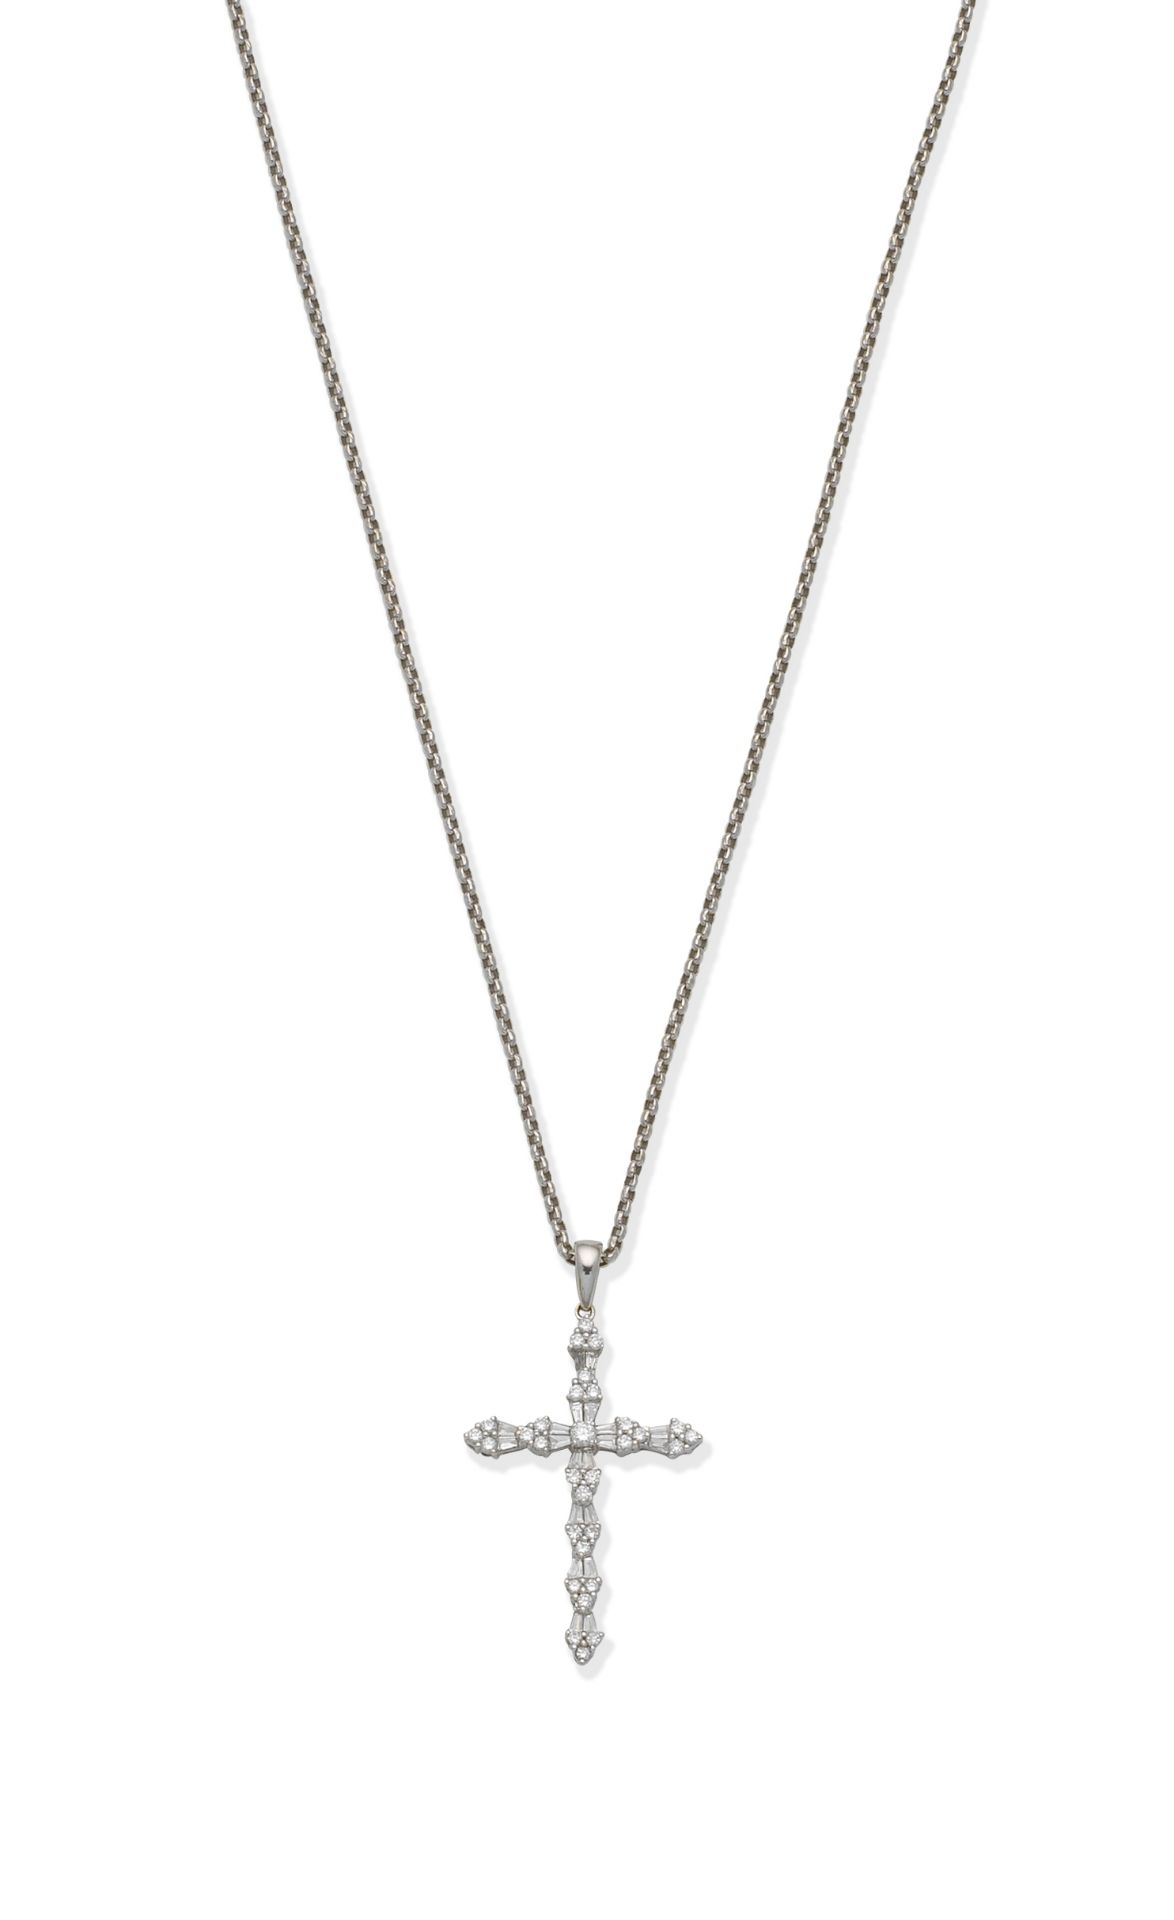 Diamond Latin cross pendant necklace